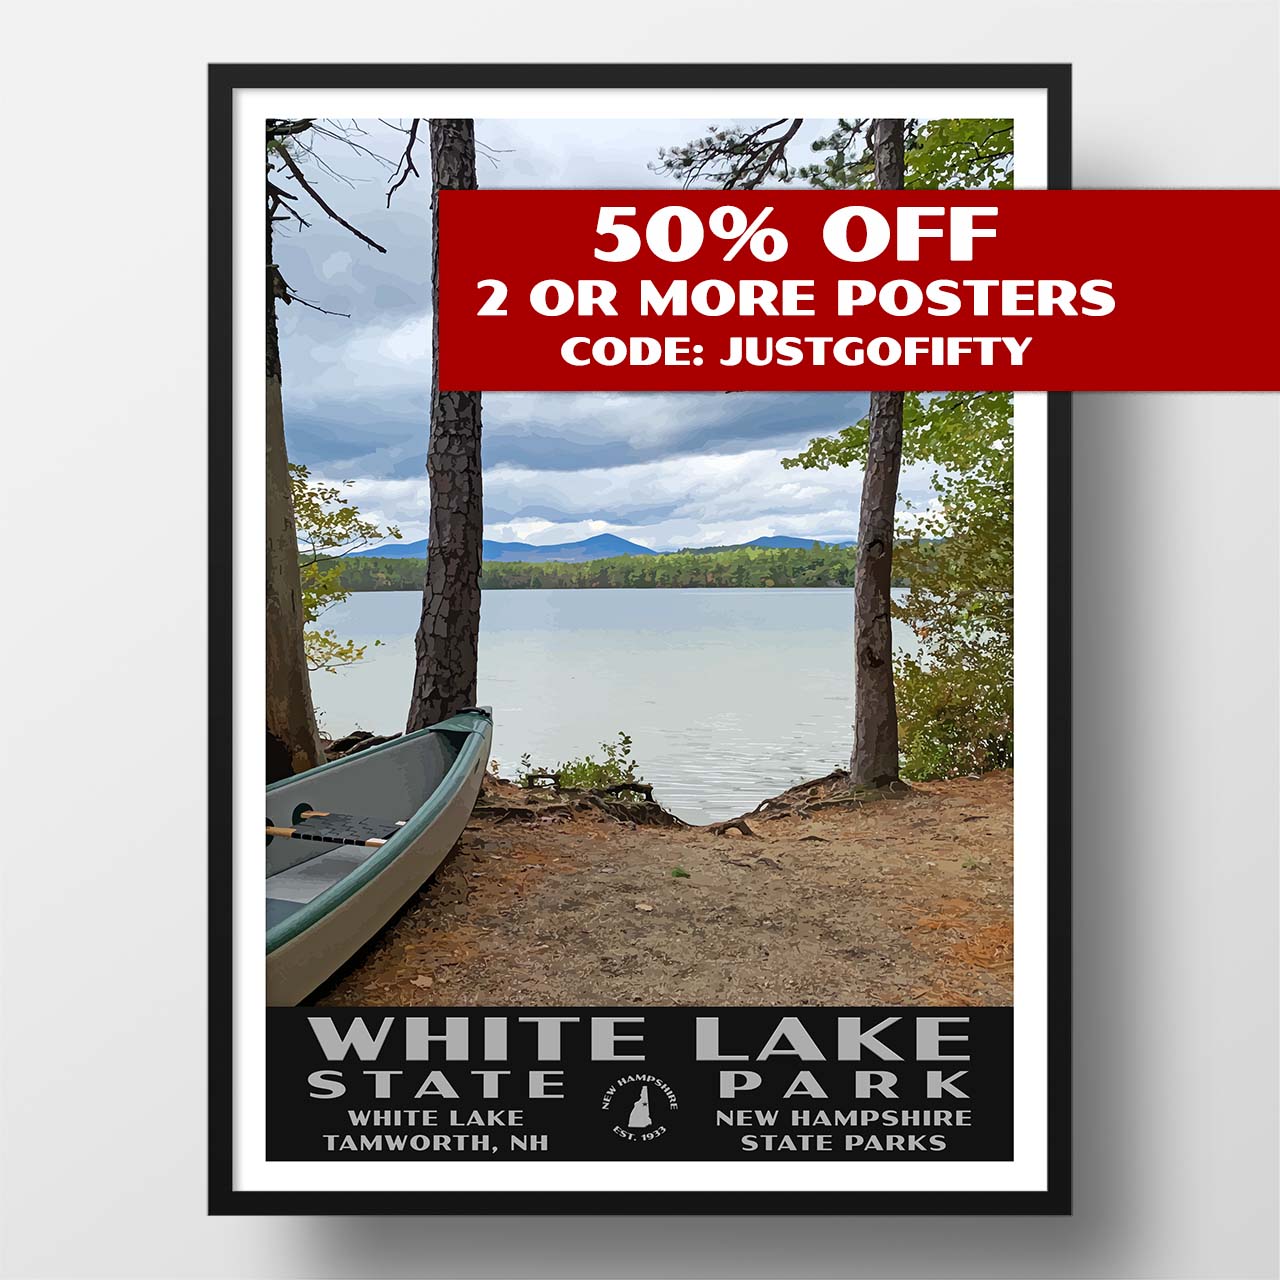 White Lake State Park poster